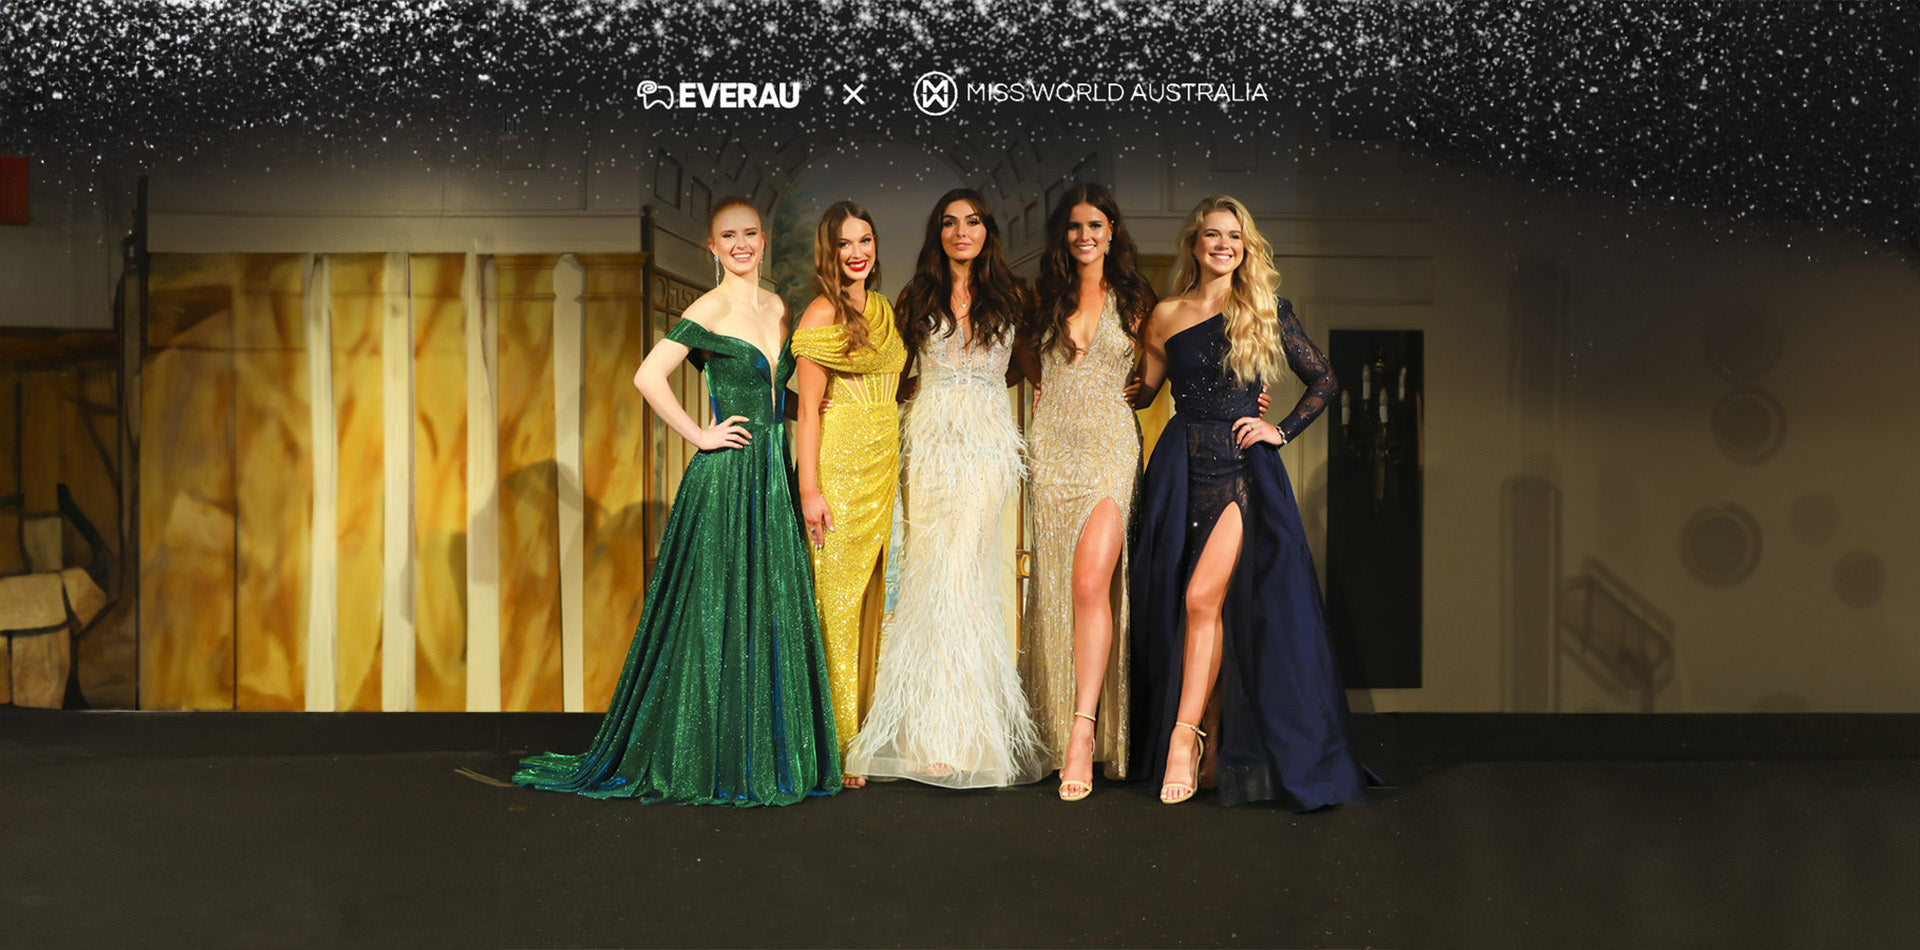 EVERAU is an Official Sponsor of Miss World Australia 2023